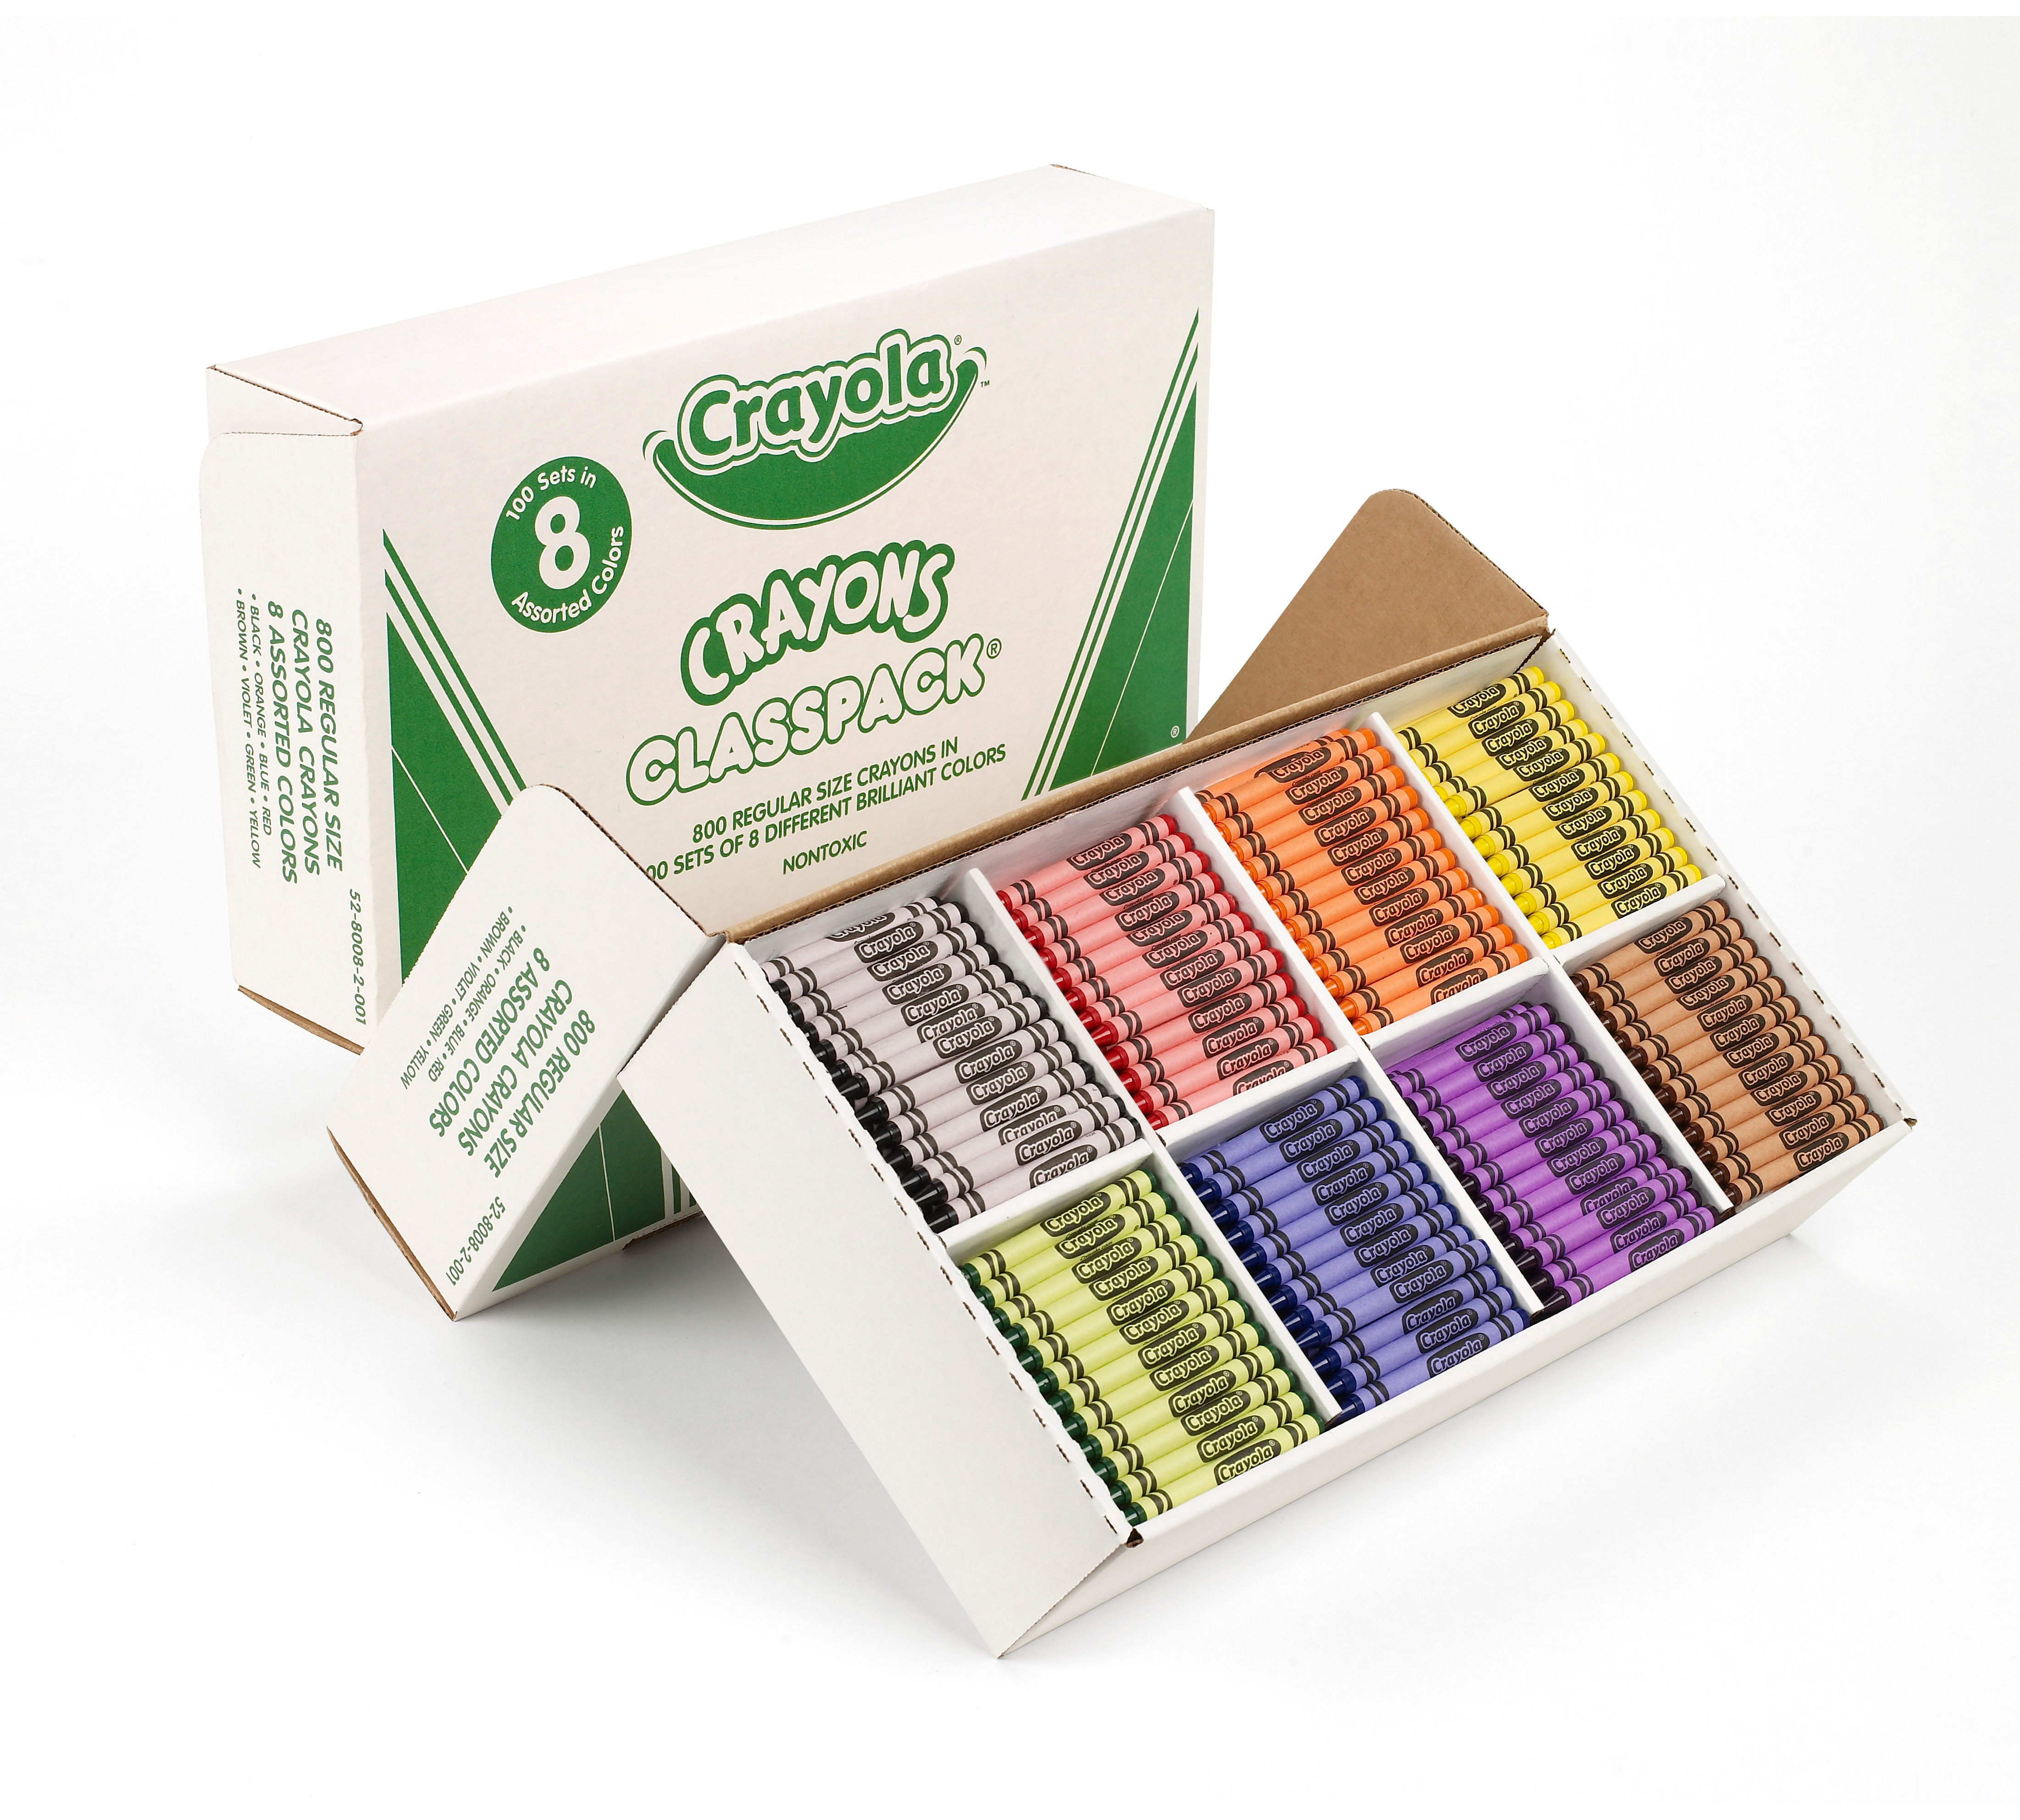 classic-crayola-crayons-classpack-800-count-8-colors-crayola